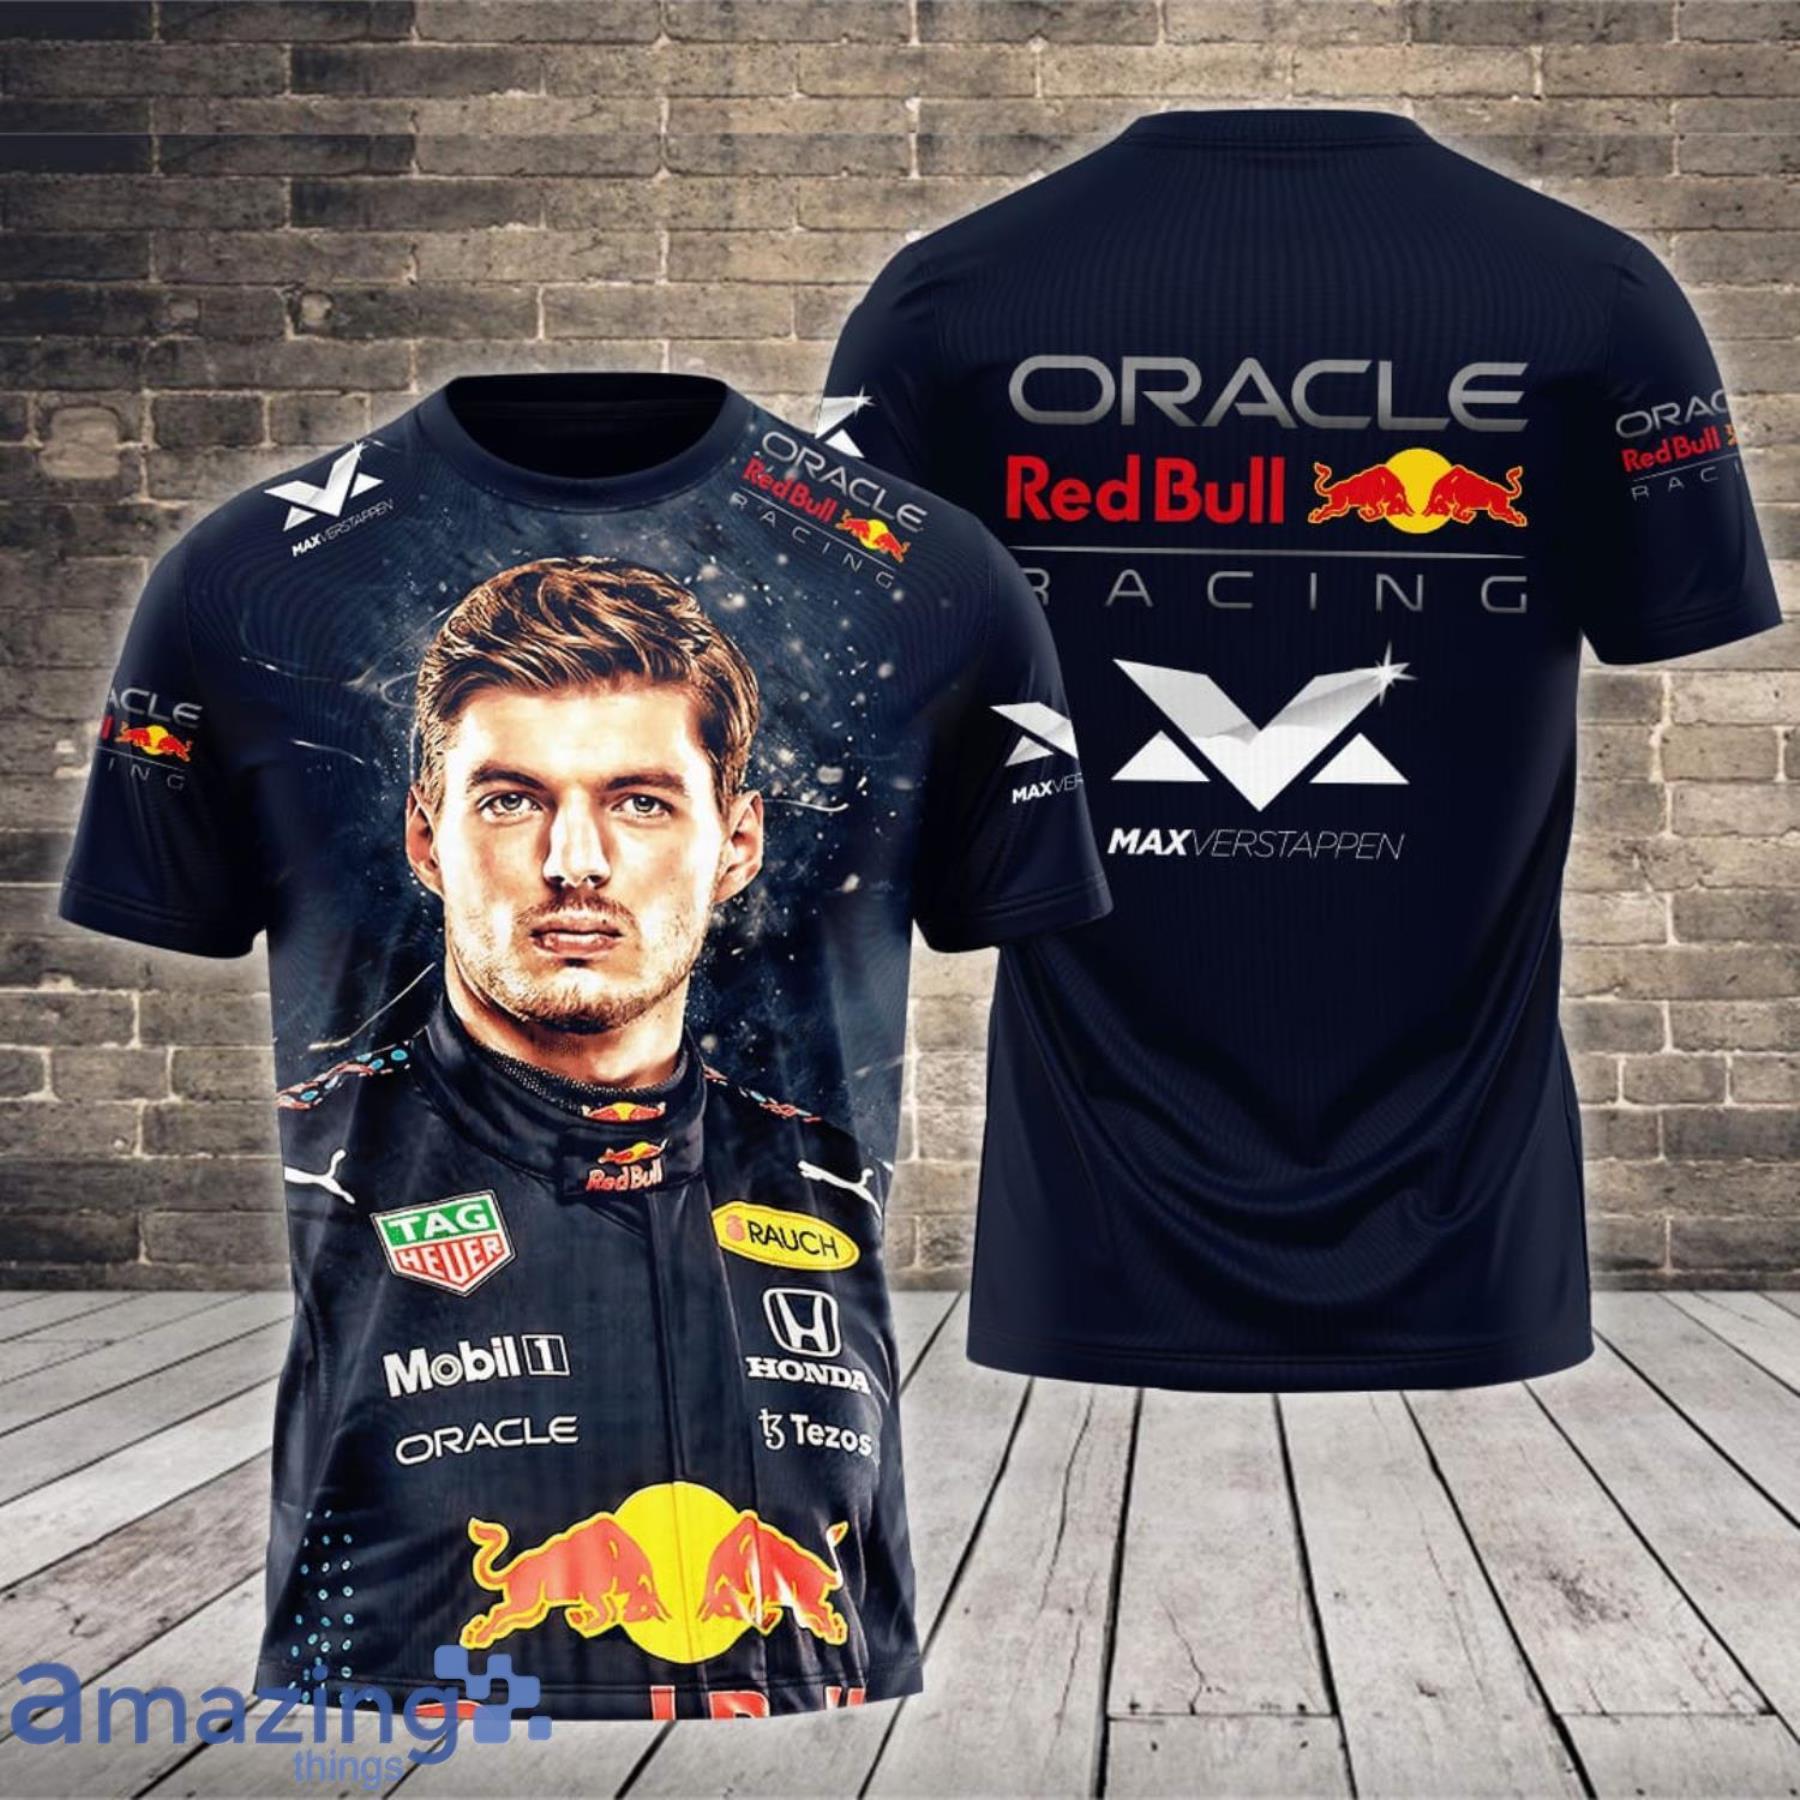 Red Bull Racing F1 Women's 2023 Max Verstappen Team T-Shirt- Navy